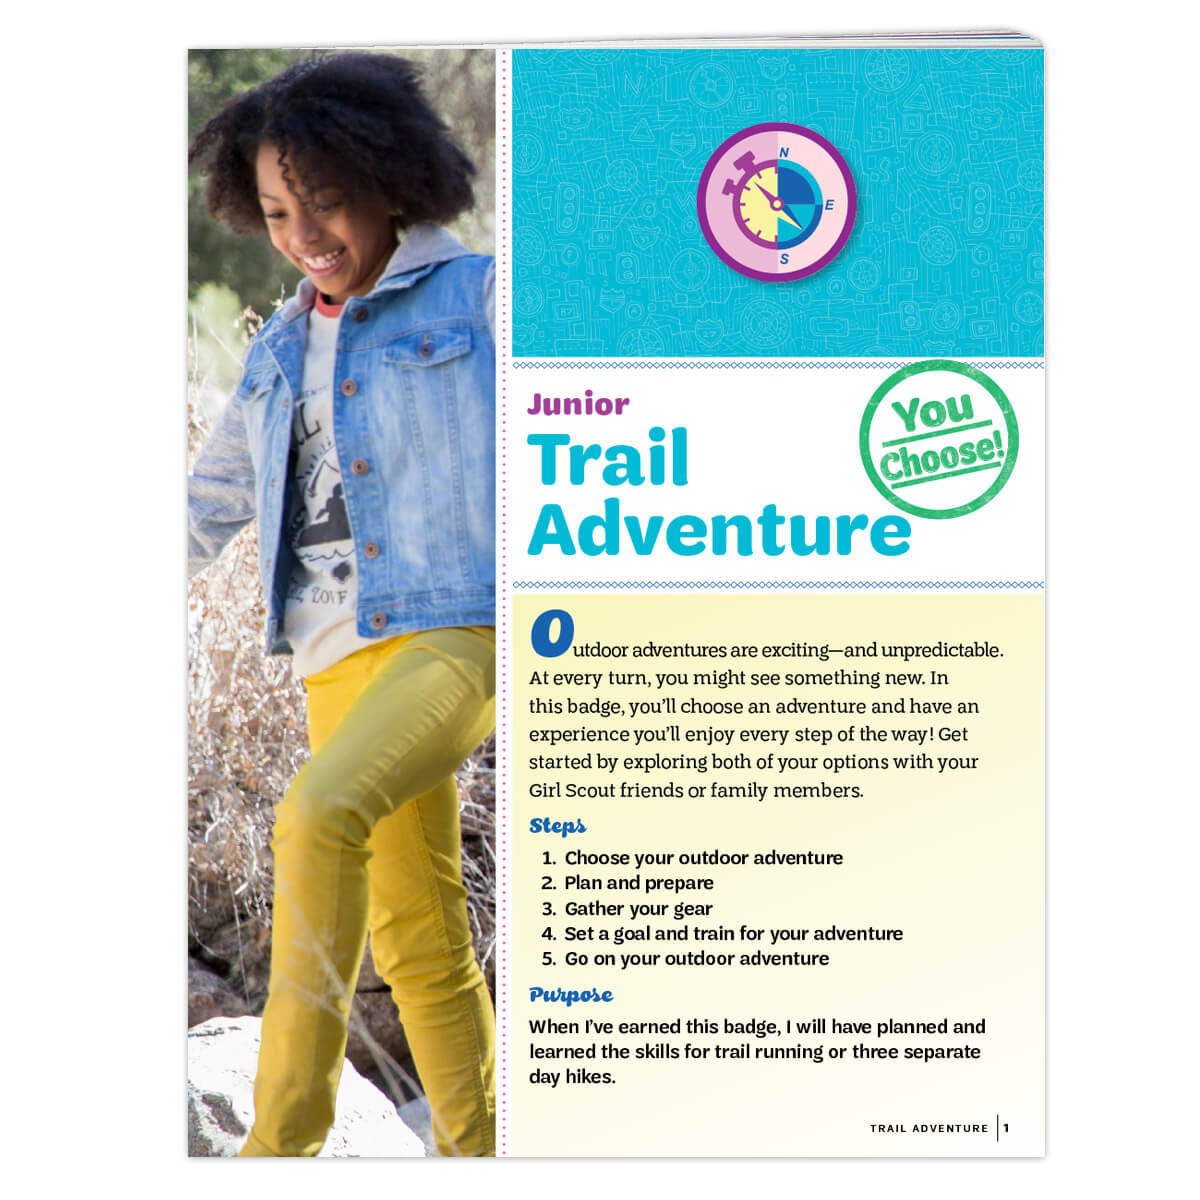 Jr. Trail Adventure REQ